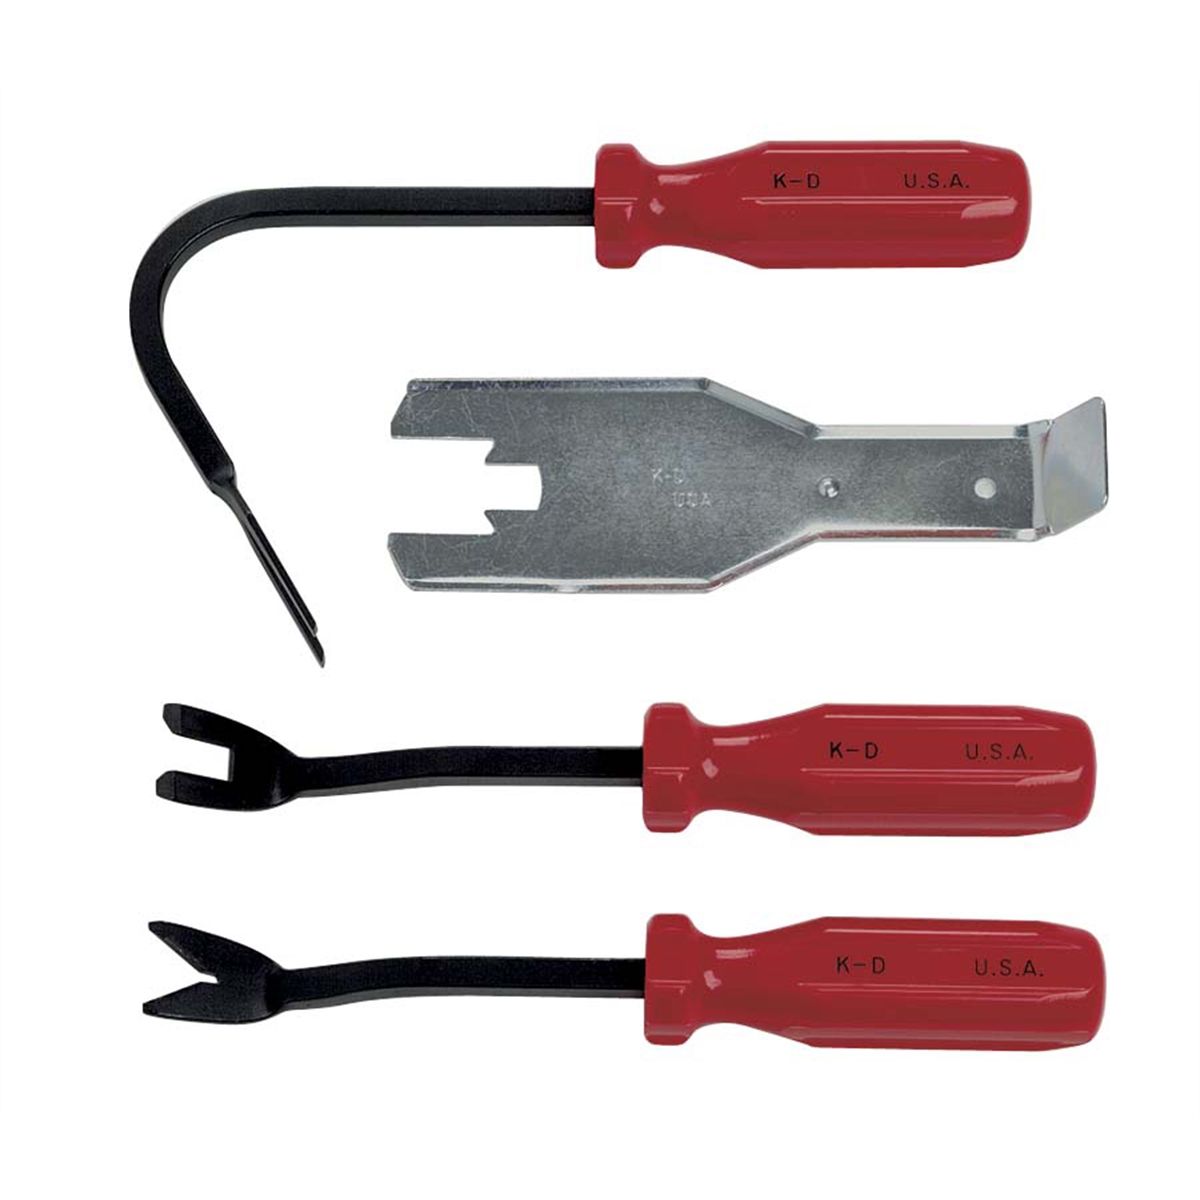 Съёмник пистонов обшивки (Upholstery clip Type): 185 мм. KD-1 инструмент. Trim Tool. Die removal Tool фото. Remover tool